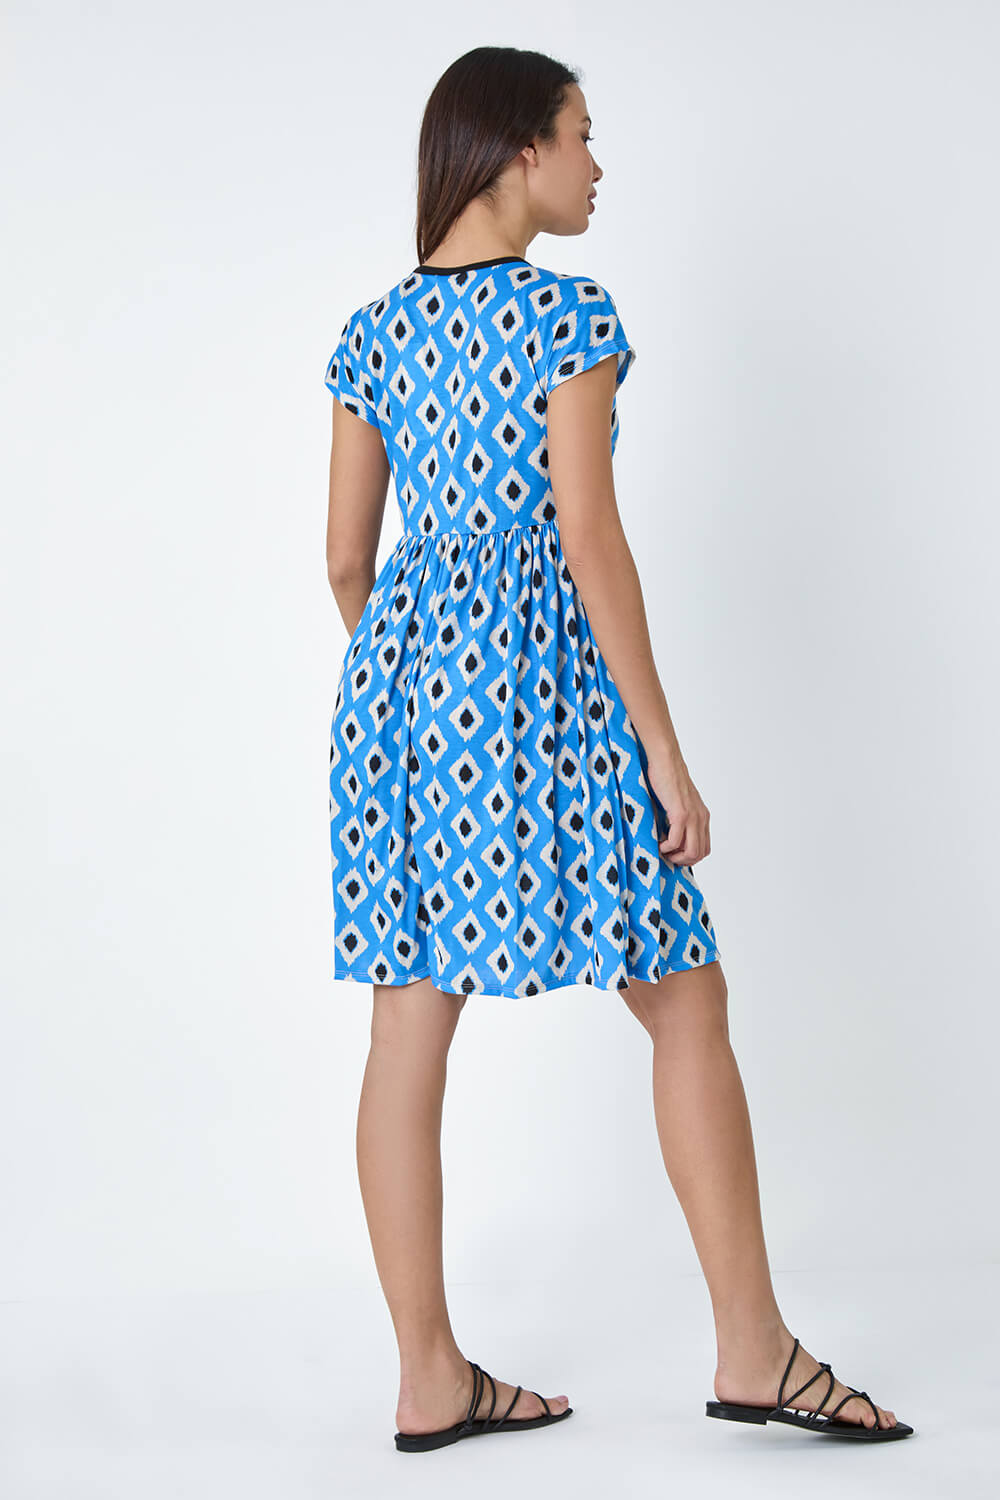 Blue Contrast Geometric Print Stretch Dress, Image 3 of 5